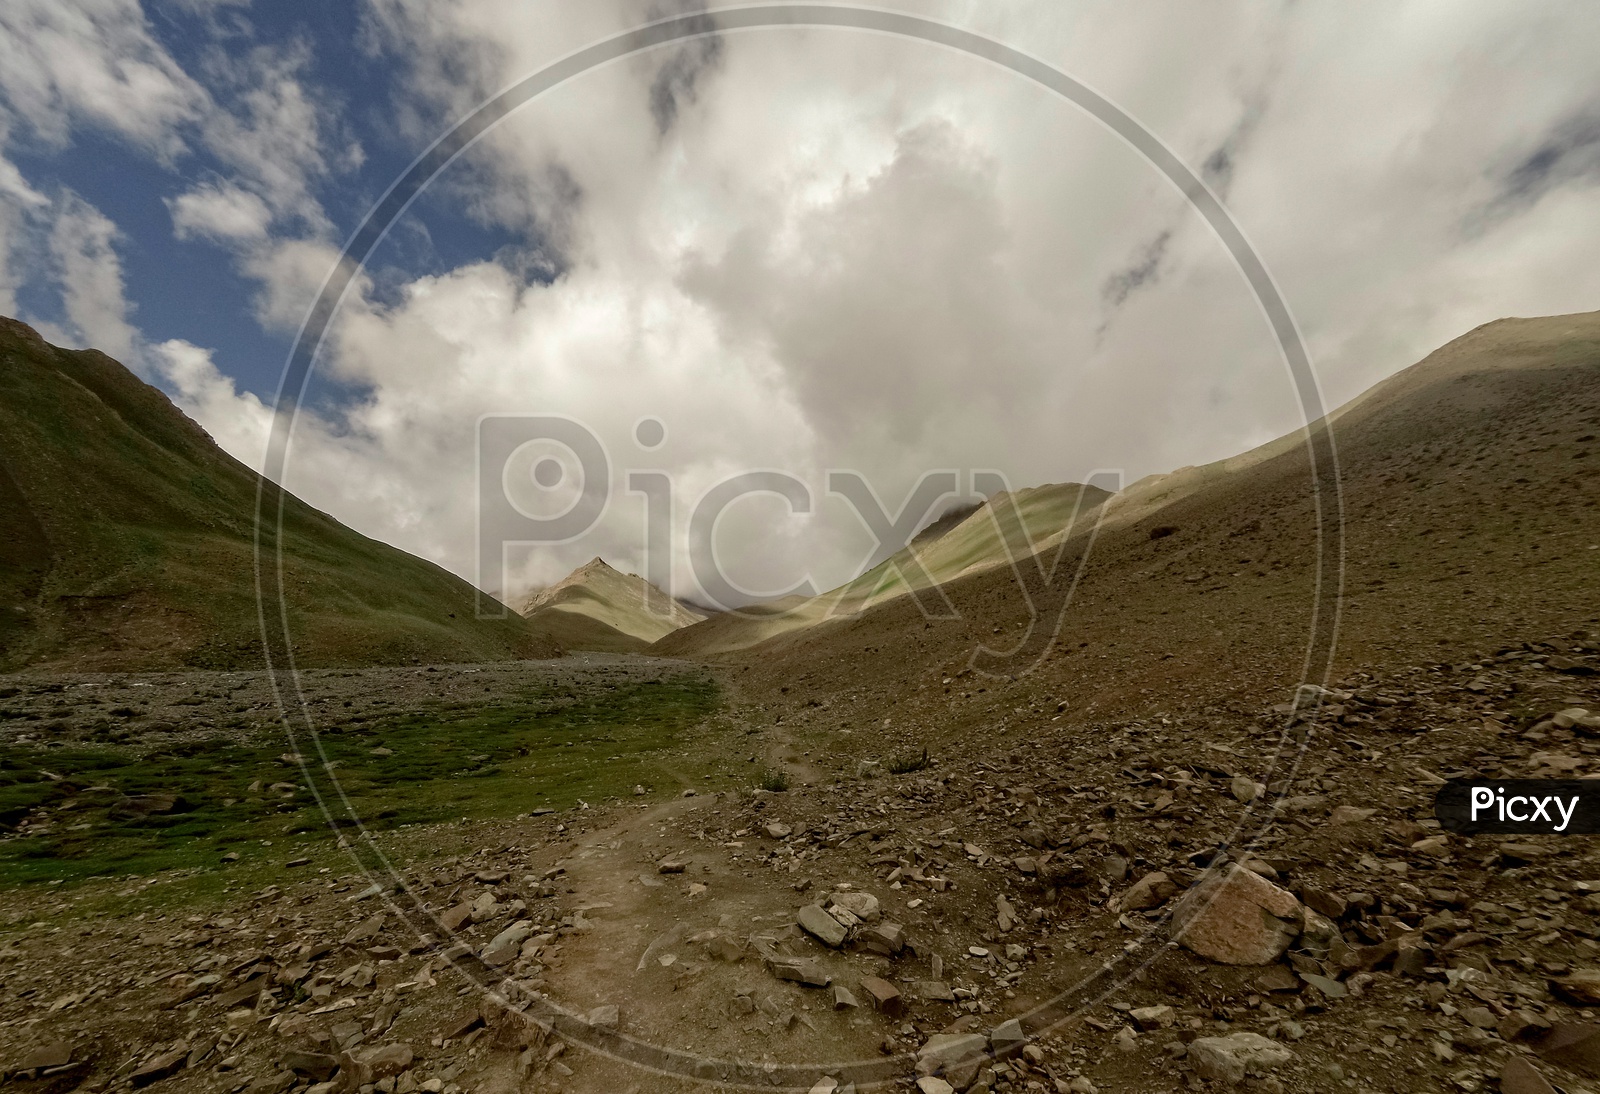 Himalayan Trail